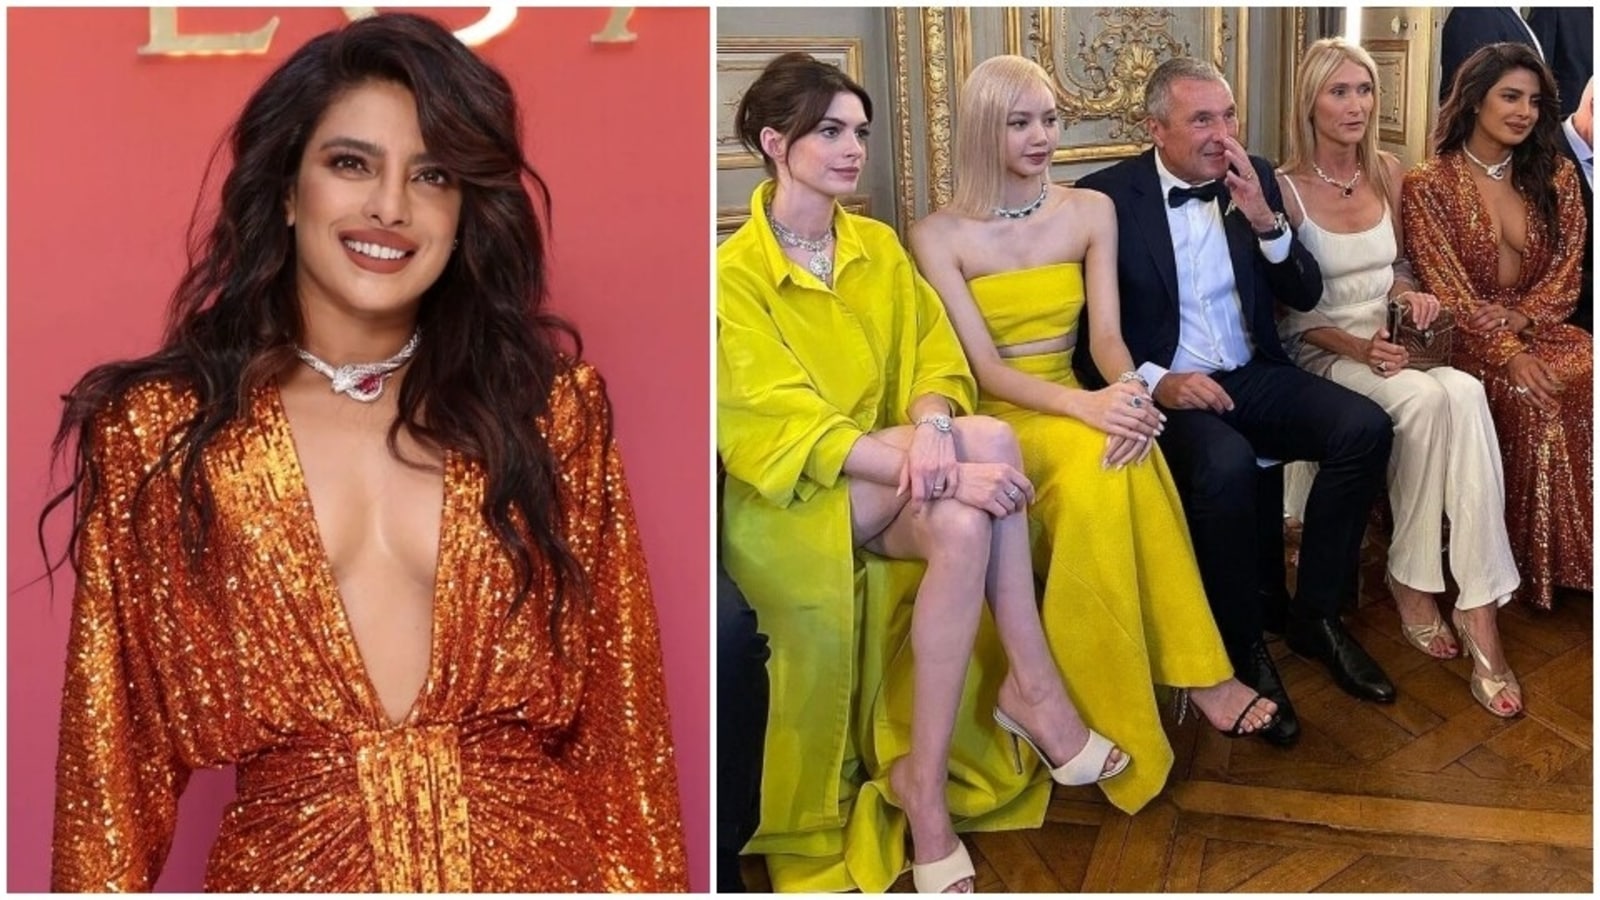 Zendaya, Lisa, Anne Hathaway, and Priyanka Chopra Unite for Bulgari in  Stunning Gowns